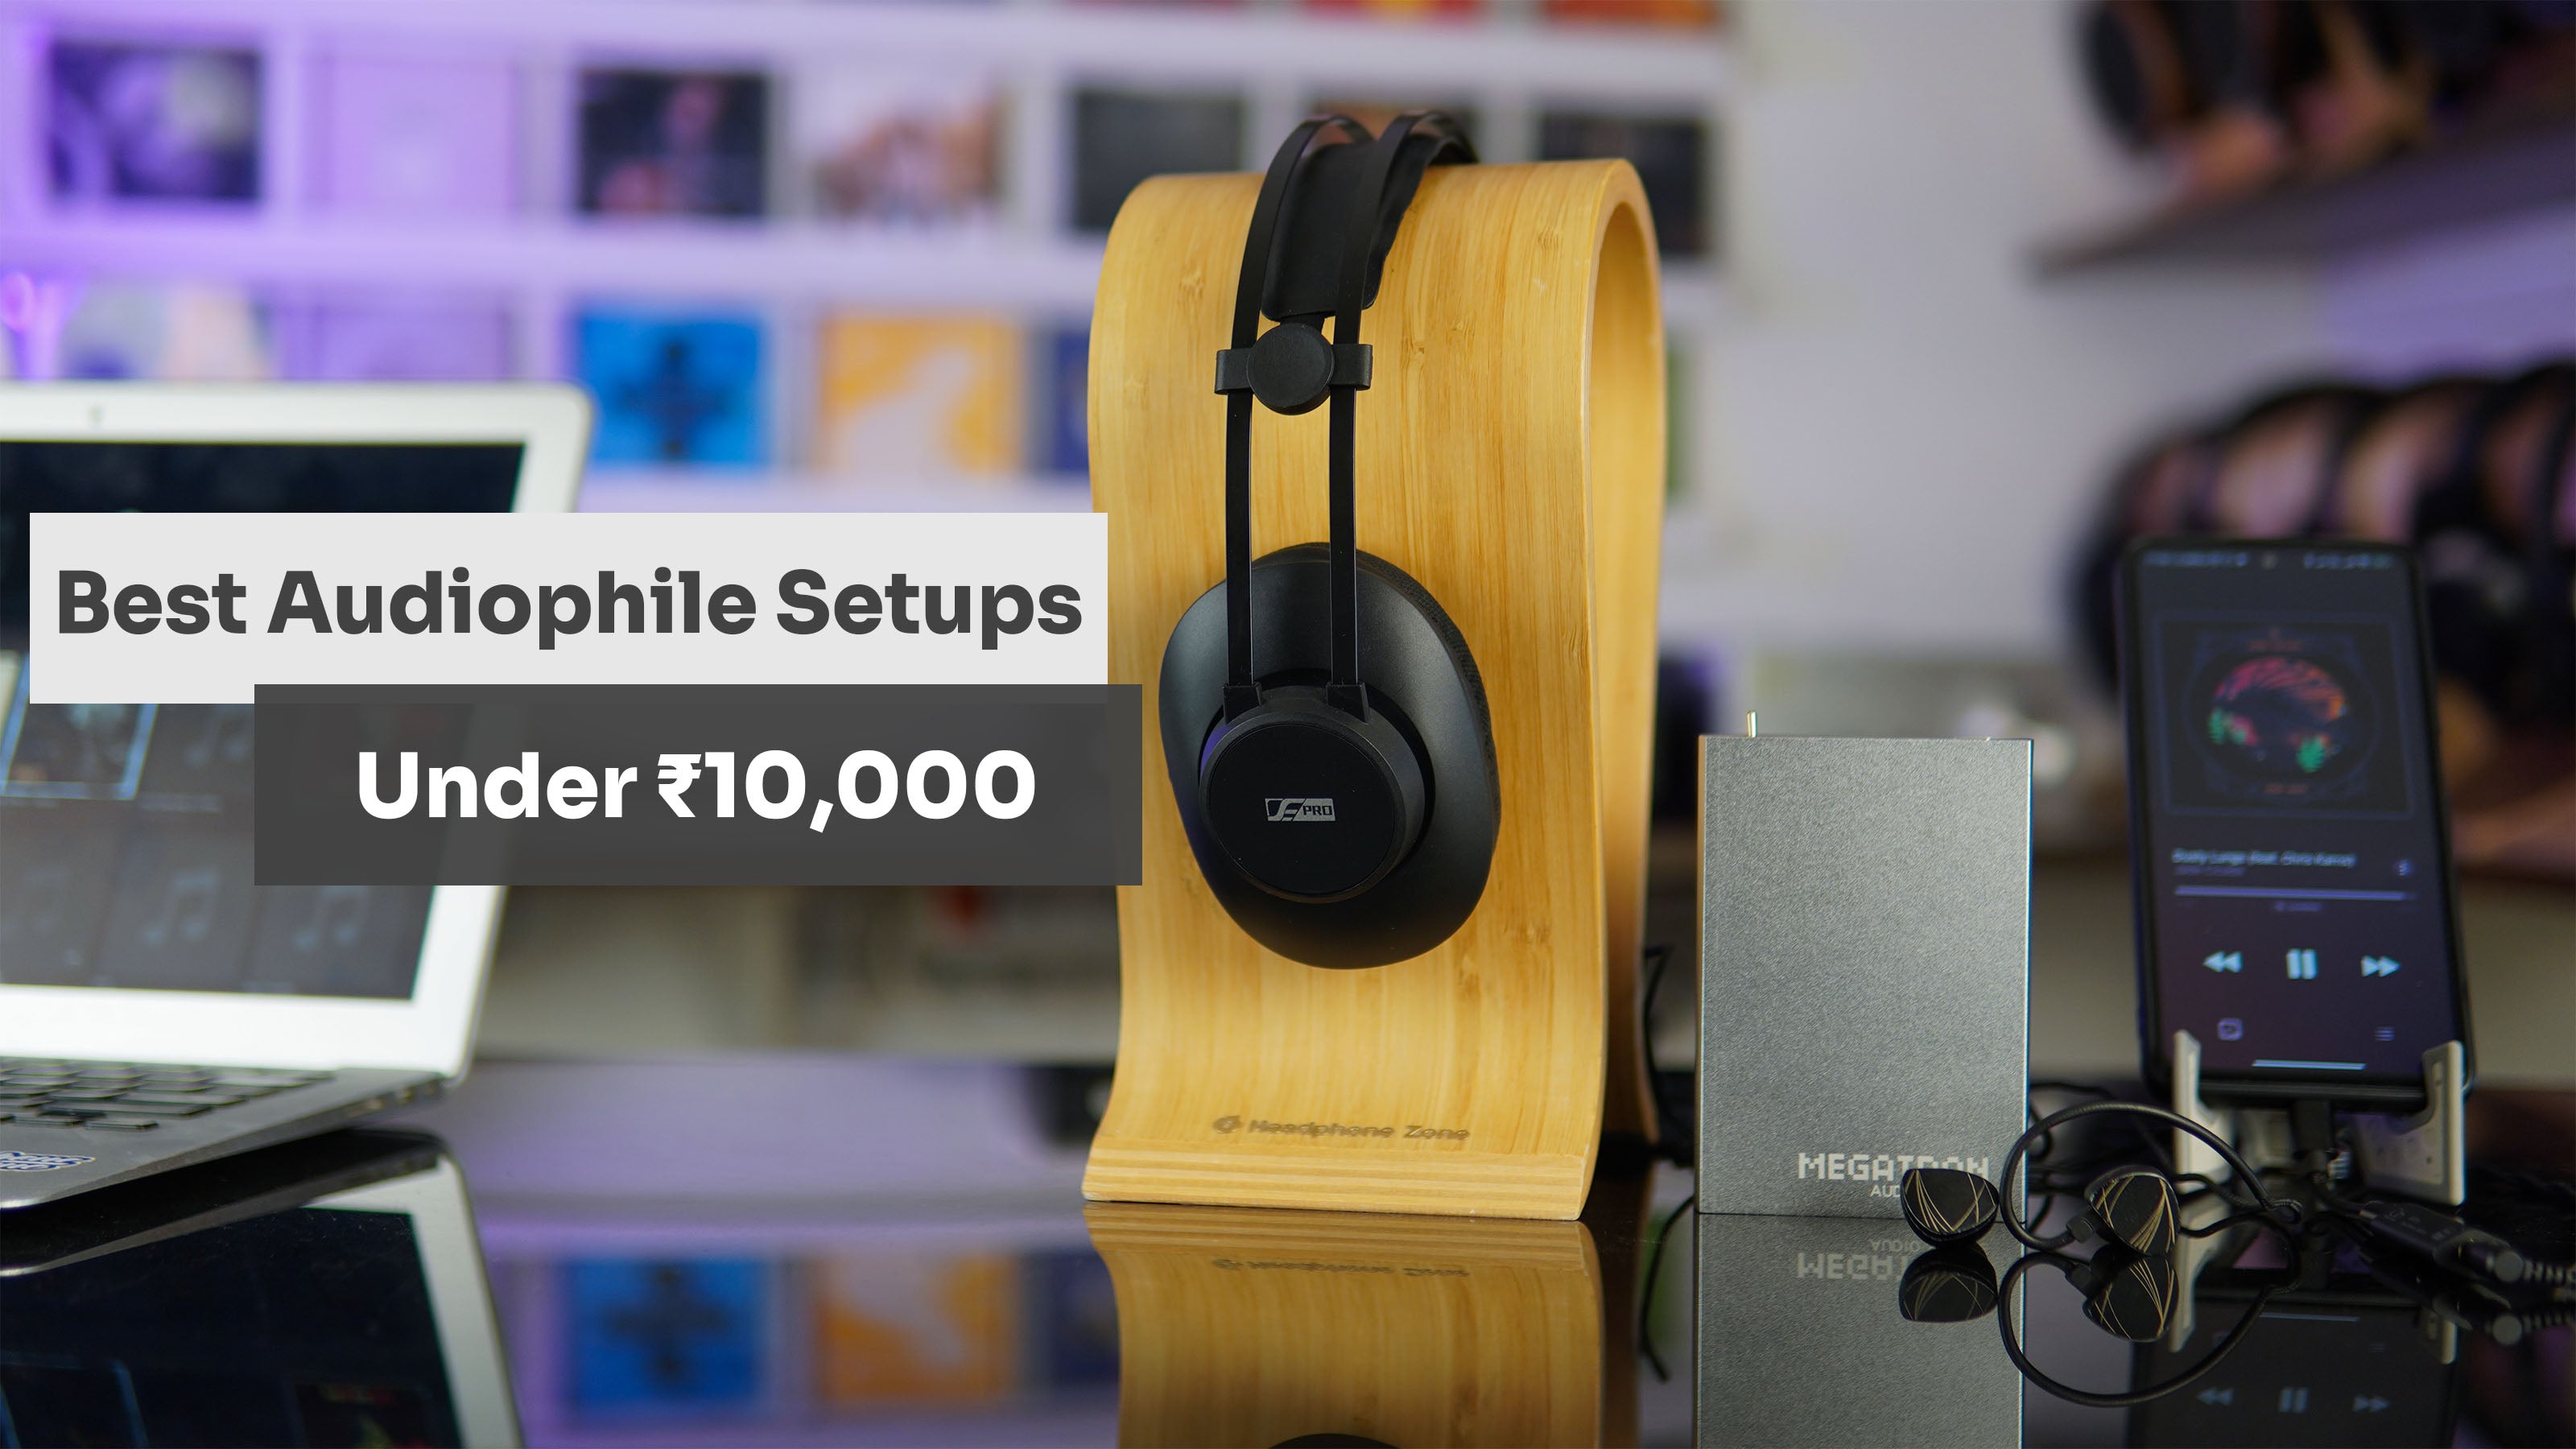 Best Headphone Setups for Audiophiles Under ₹10,000